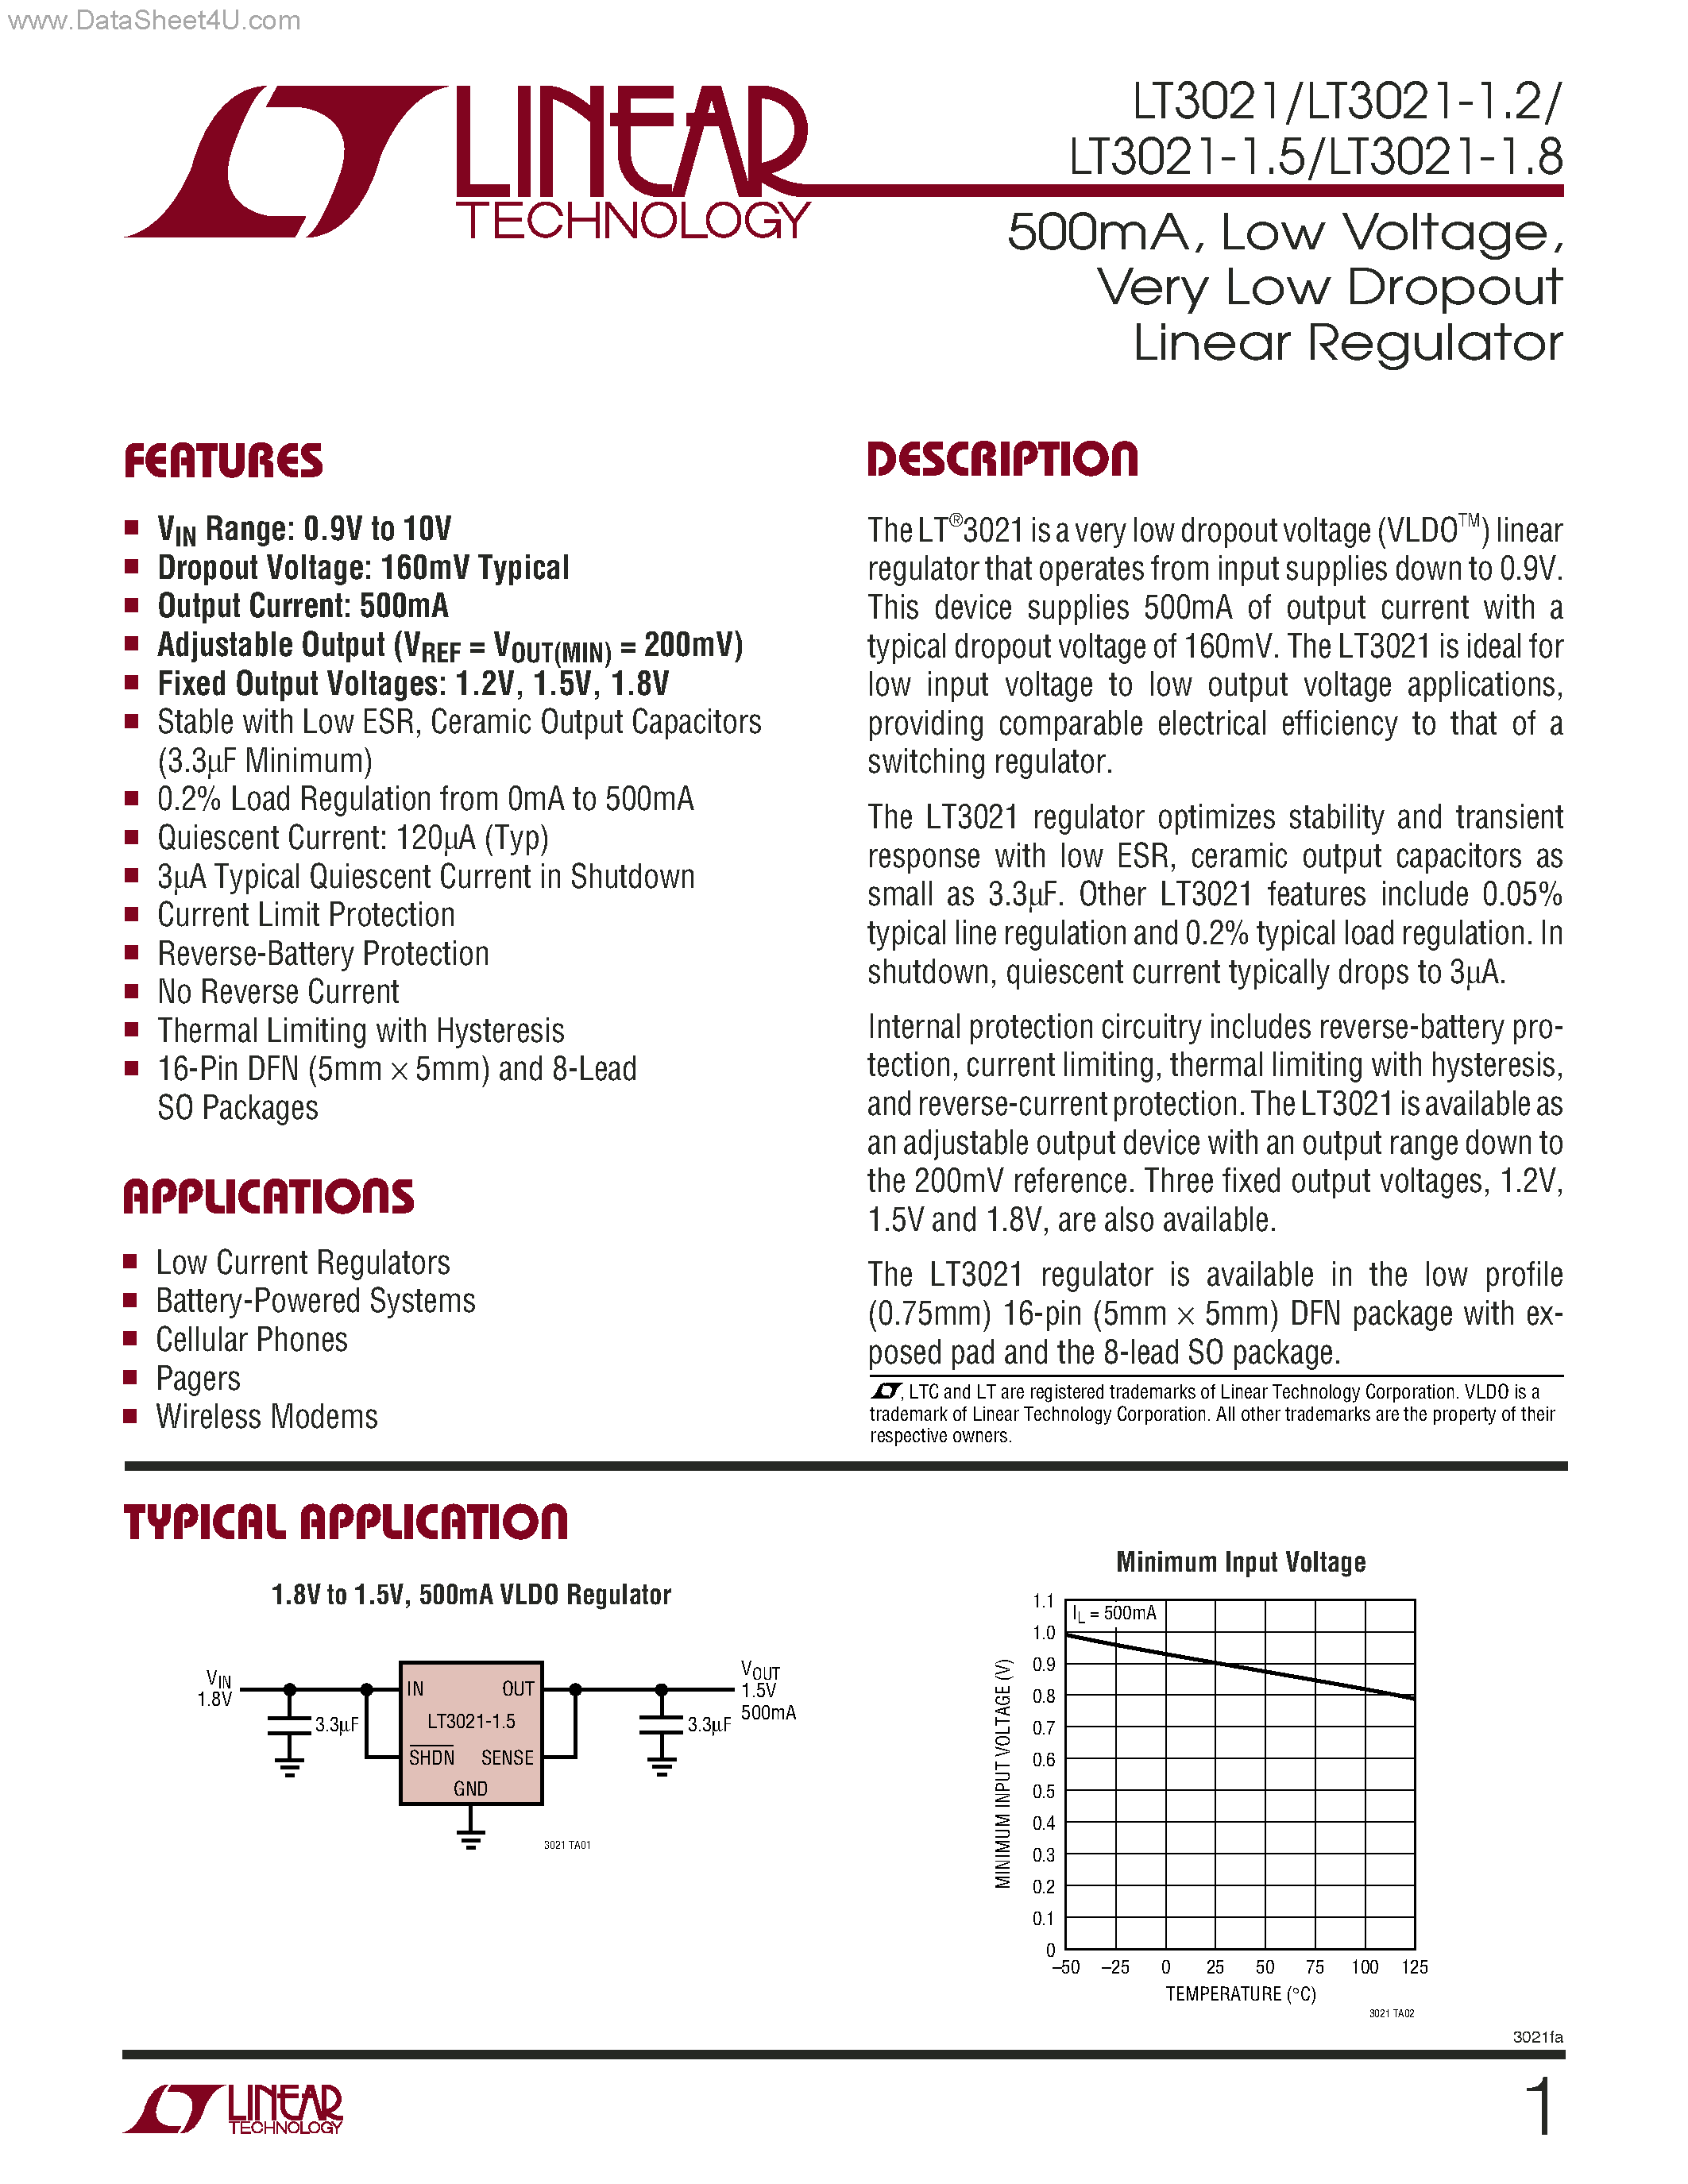 Даташит LT3021 - Very Low Dropout Linear Regulator страница 1